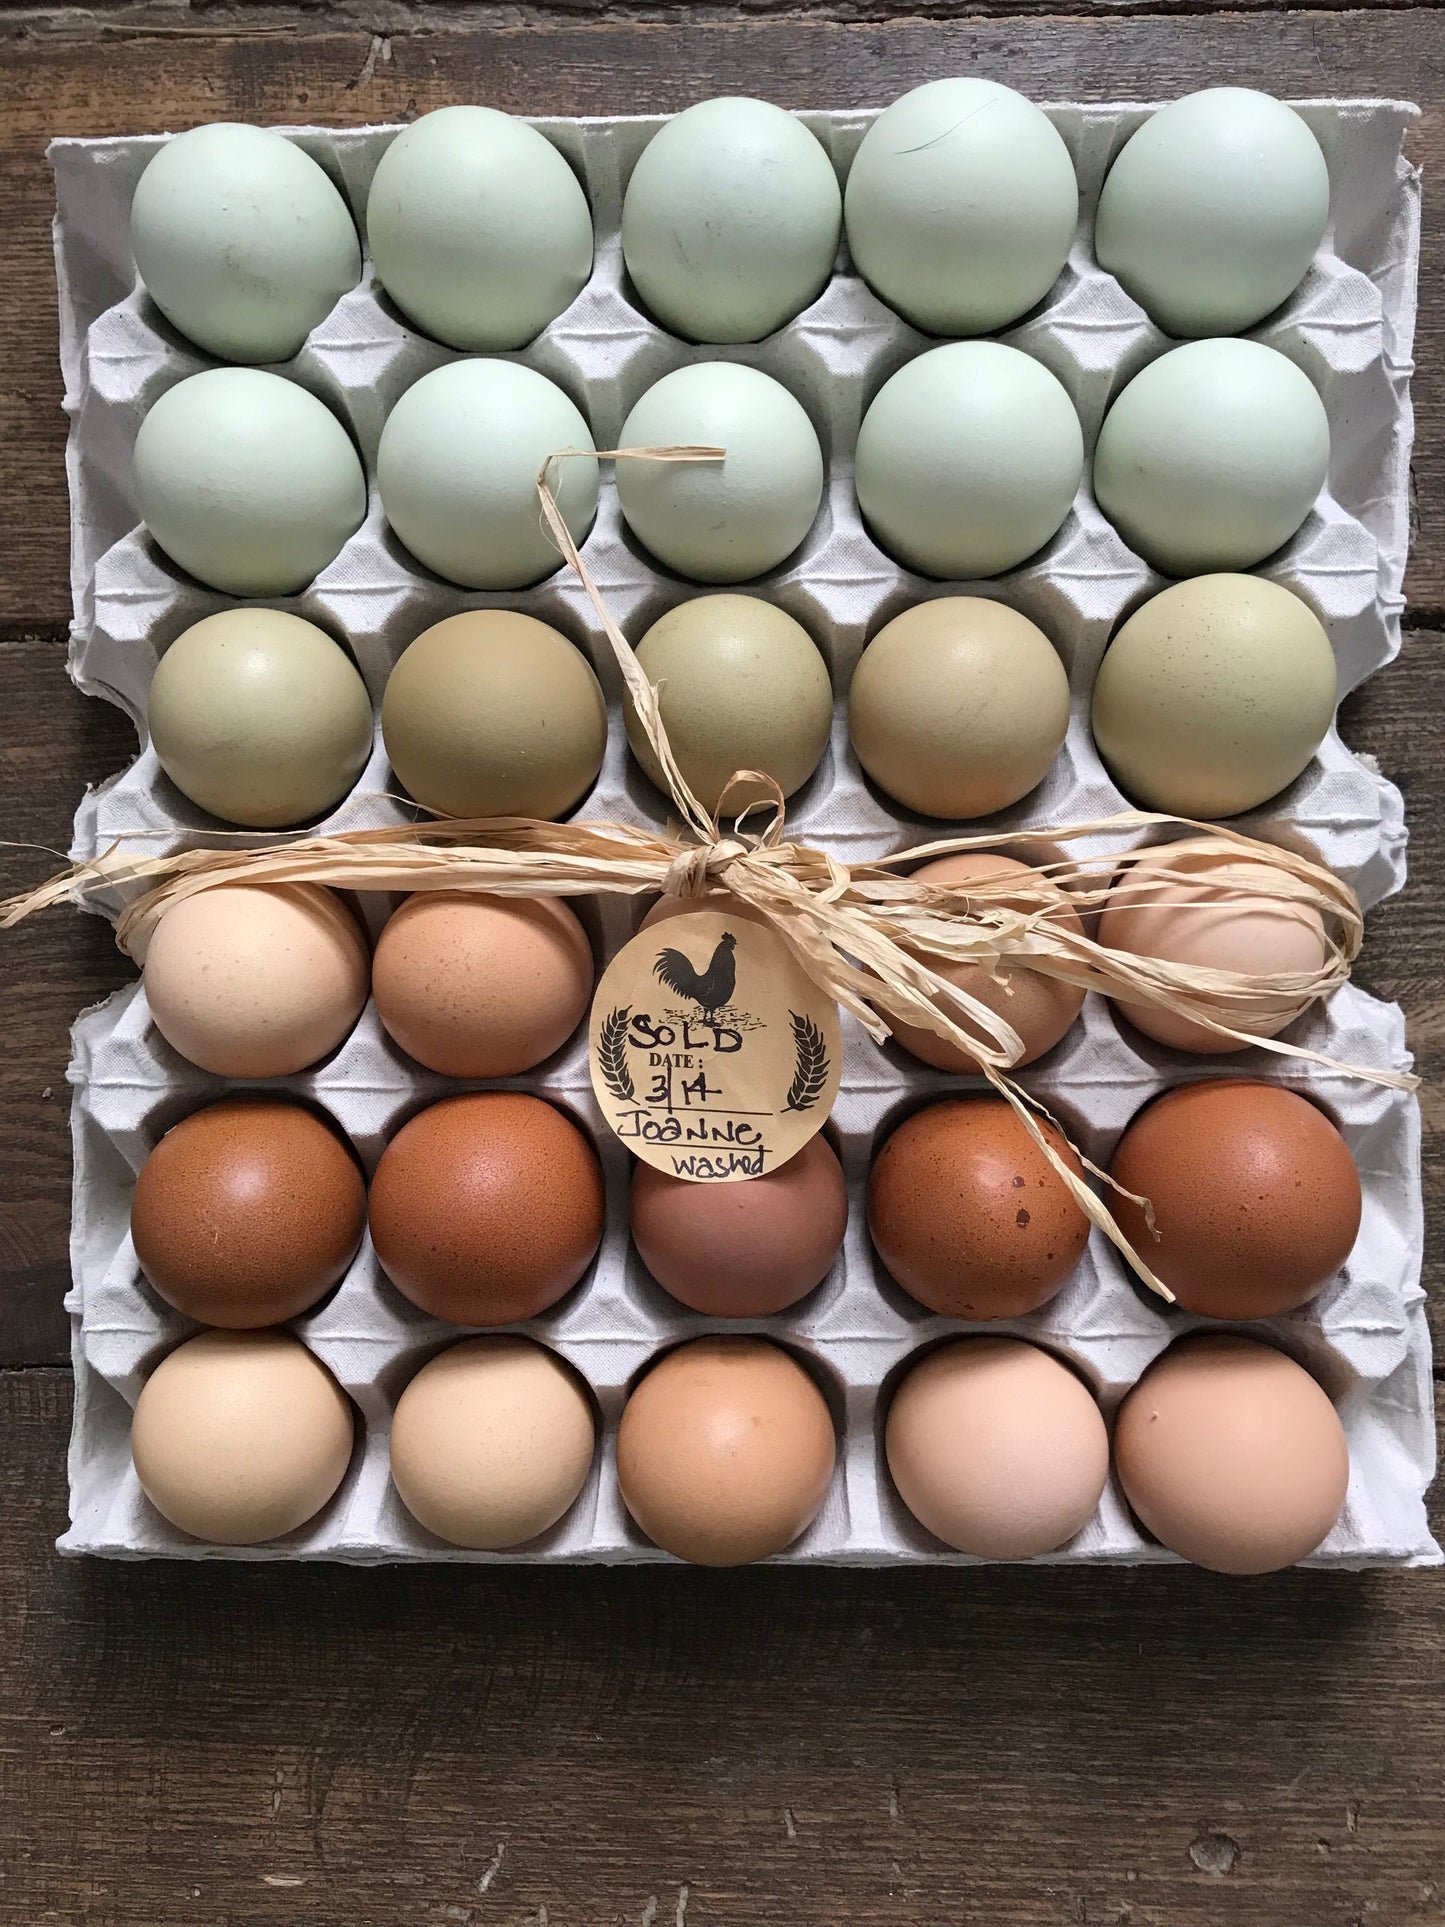 Eggs (Farm Fresh, pasture raised)